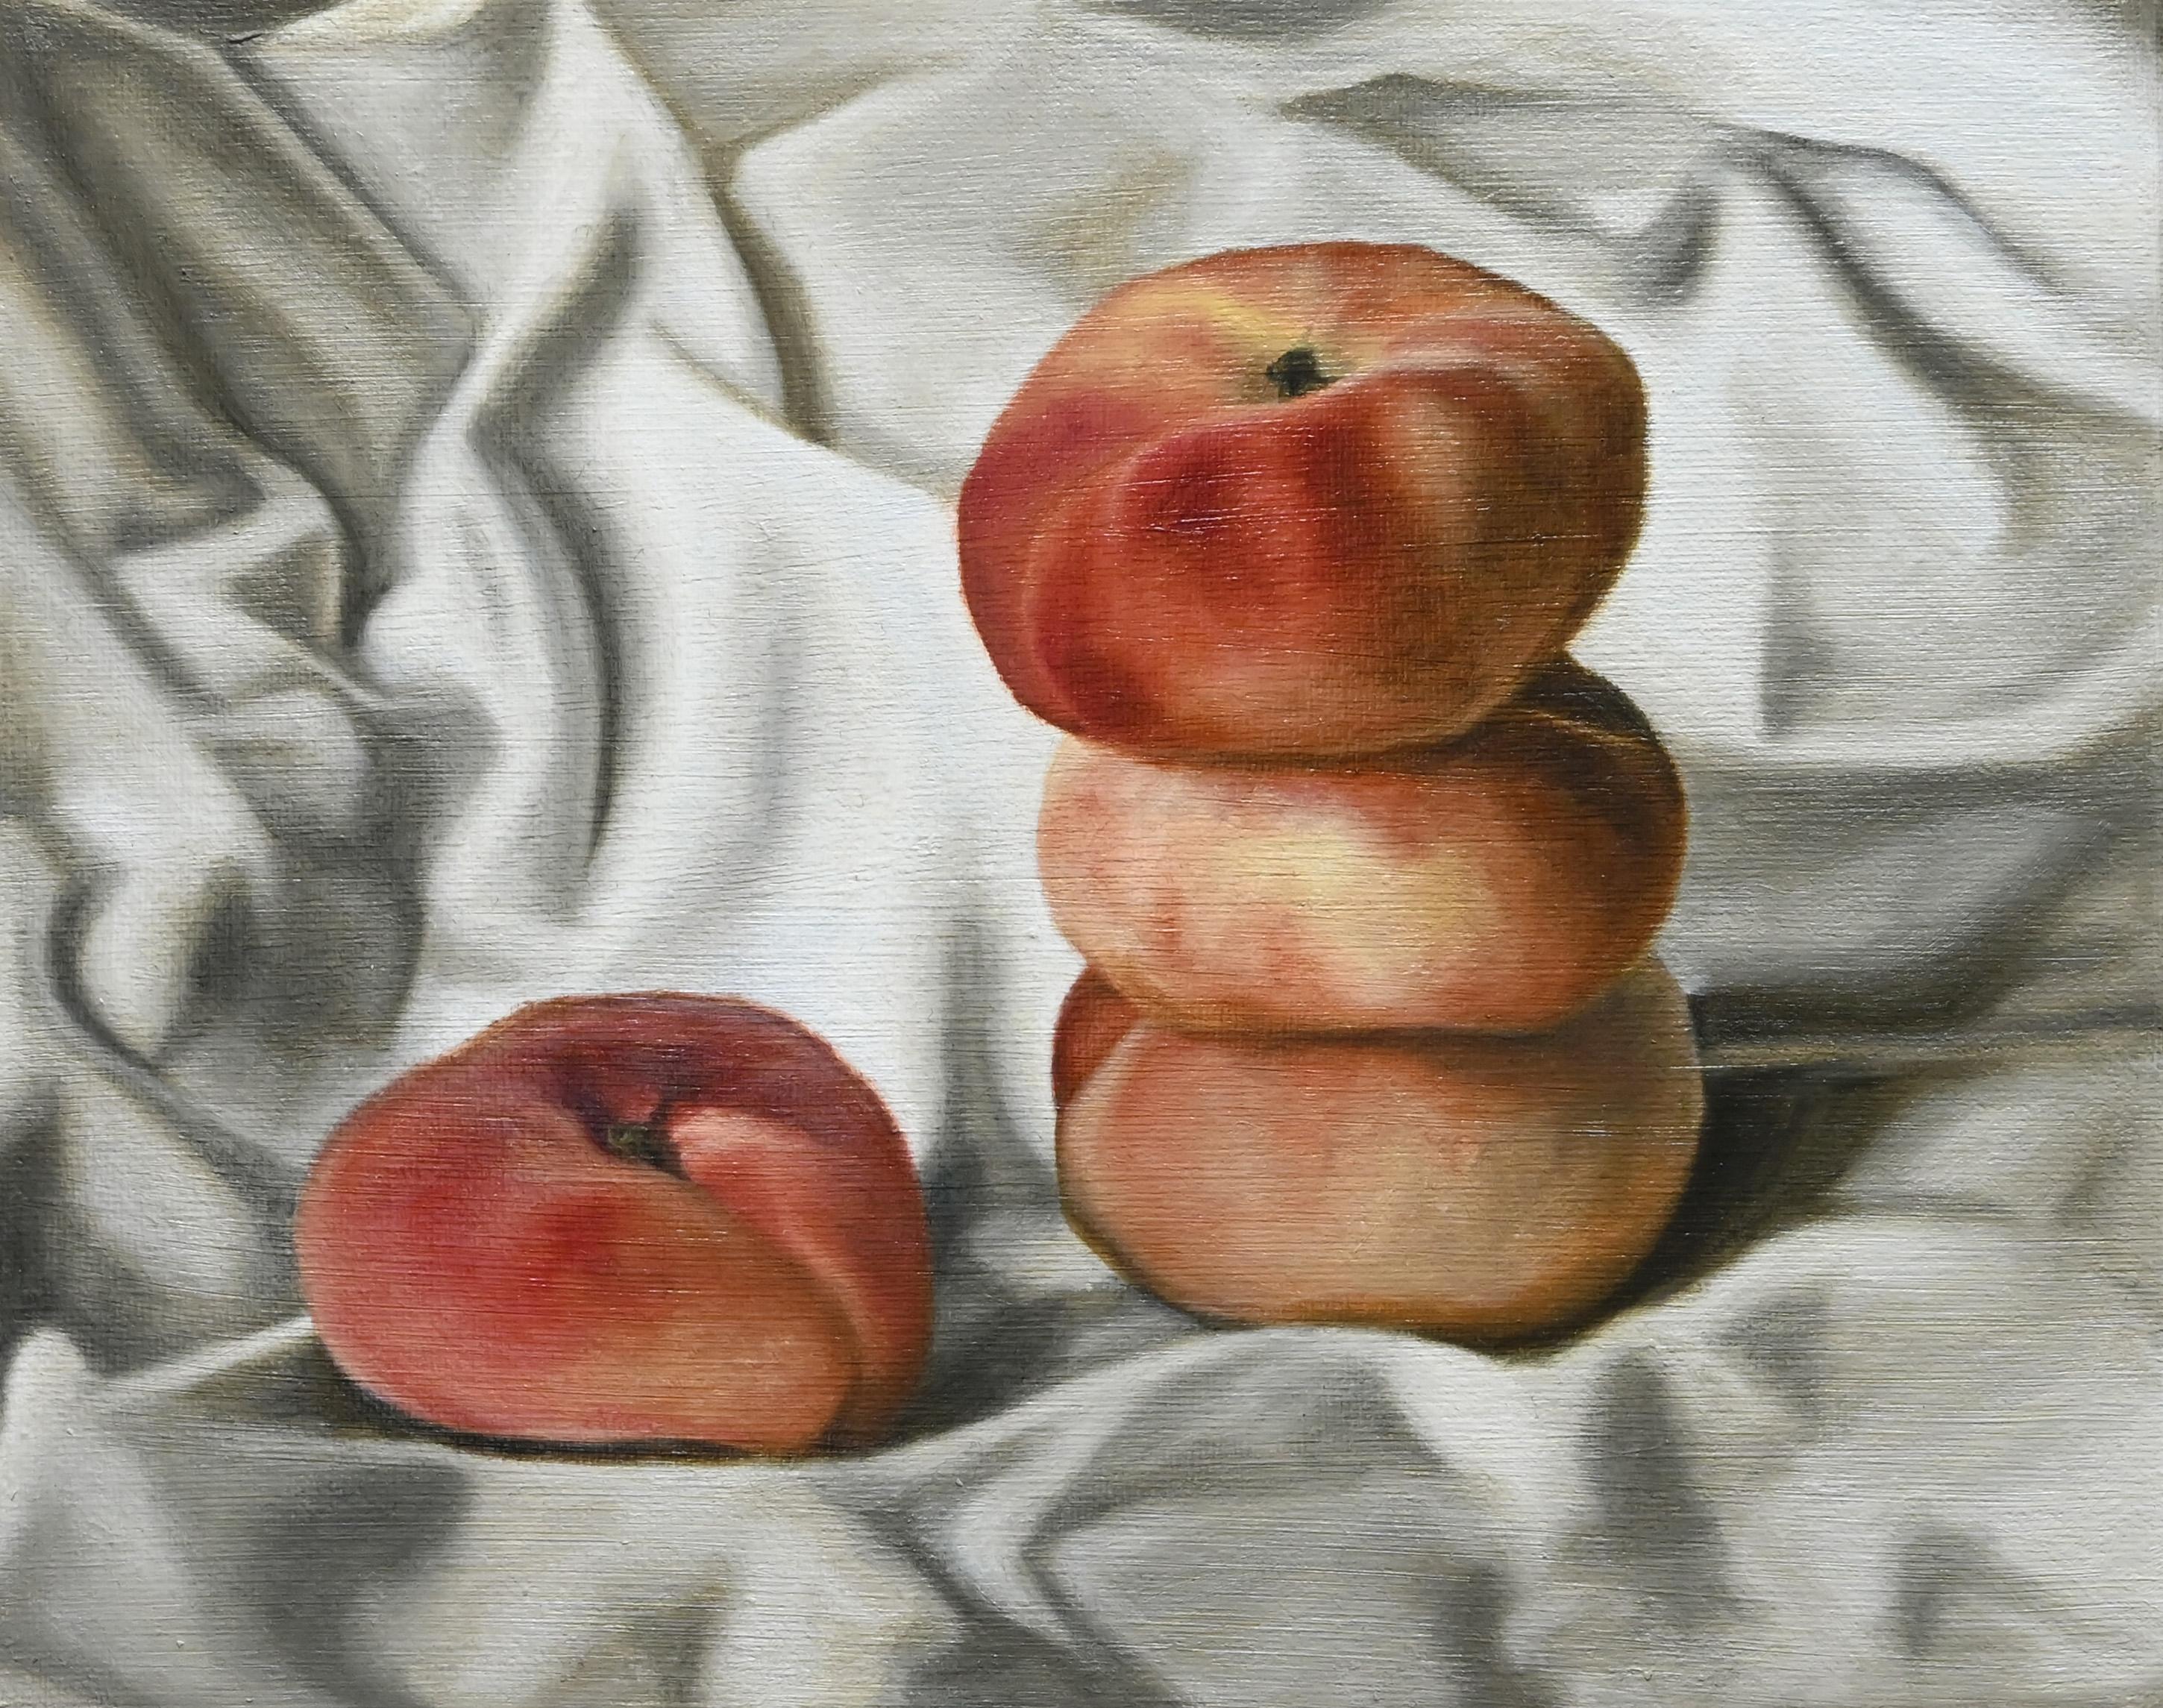 Jordan Baker Still-Life Painting - "Stack of Donut Peaches" still life with fruit, velvet, realism, Caravaggio